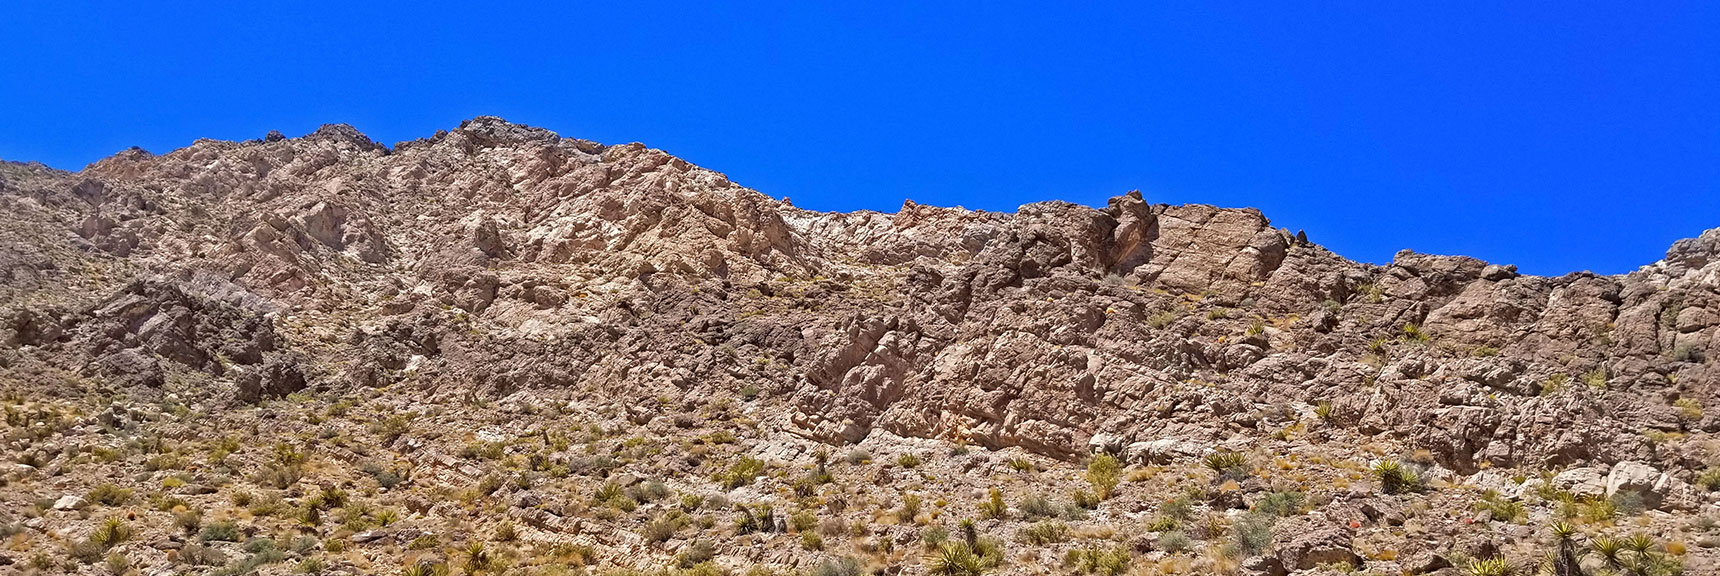 Hopeful Class 3 Approaches to Launch Ramp Mt. Ridge Area | Little La Madre Mt, Little El Padre Mt, Little Burnt Peak | Near La Madre Mountains Wilderness, Nevada